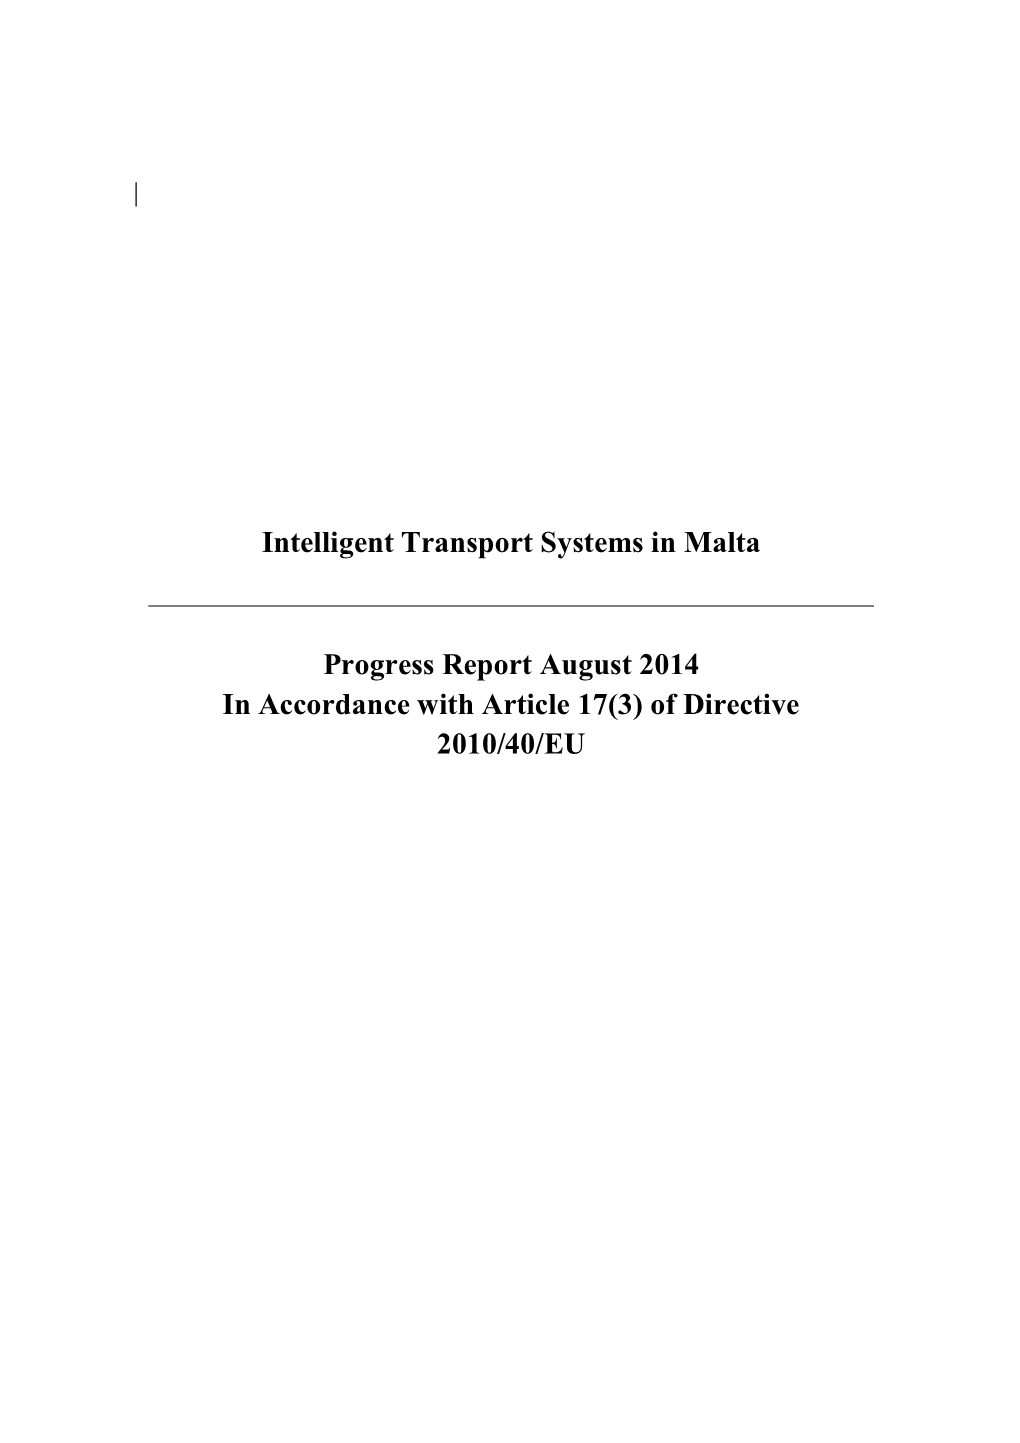 Intelligent Transport Systems in Malta Progress Report August 2014 In